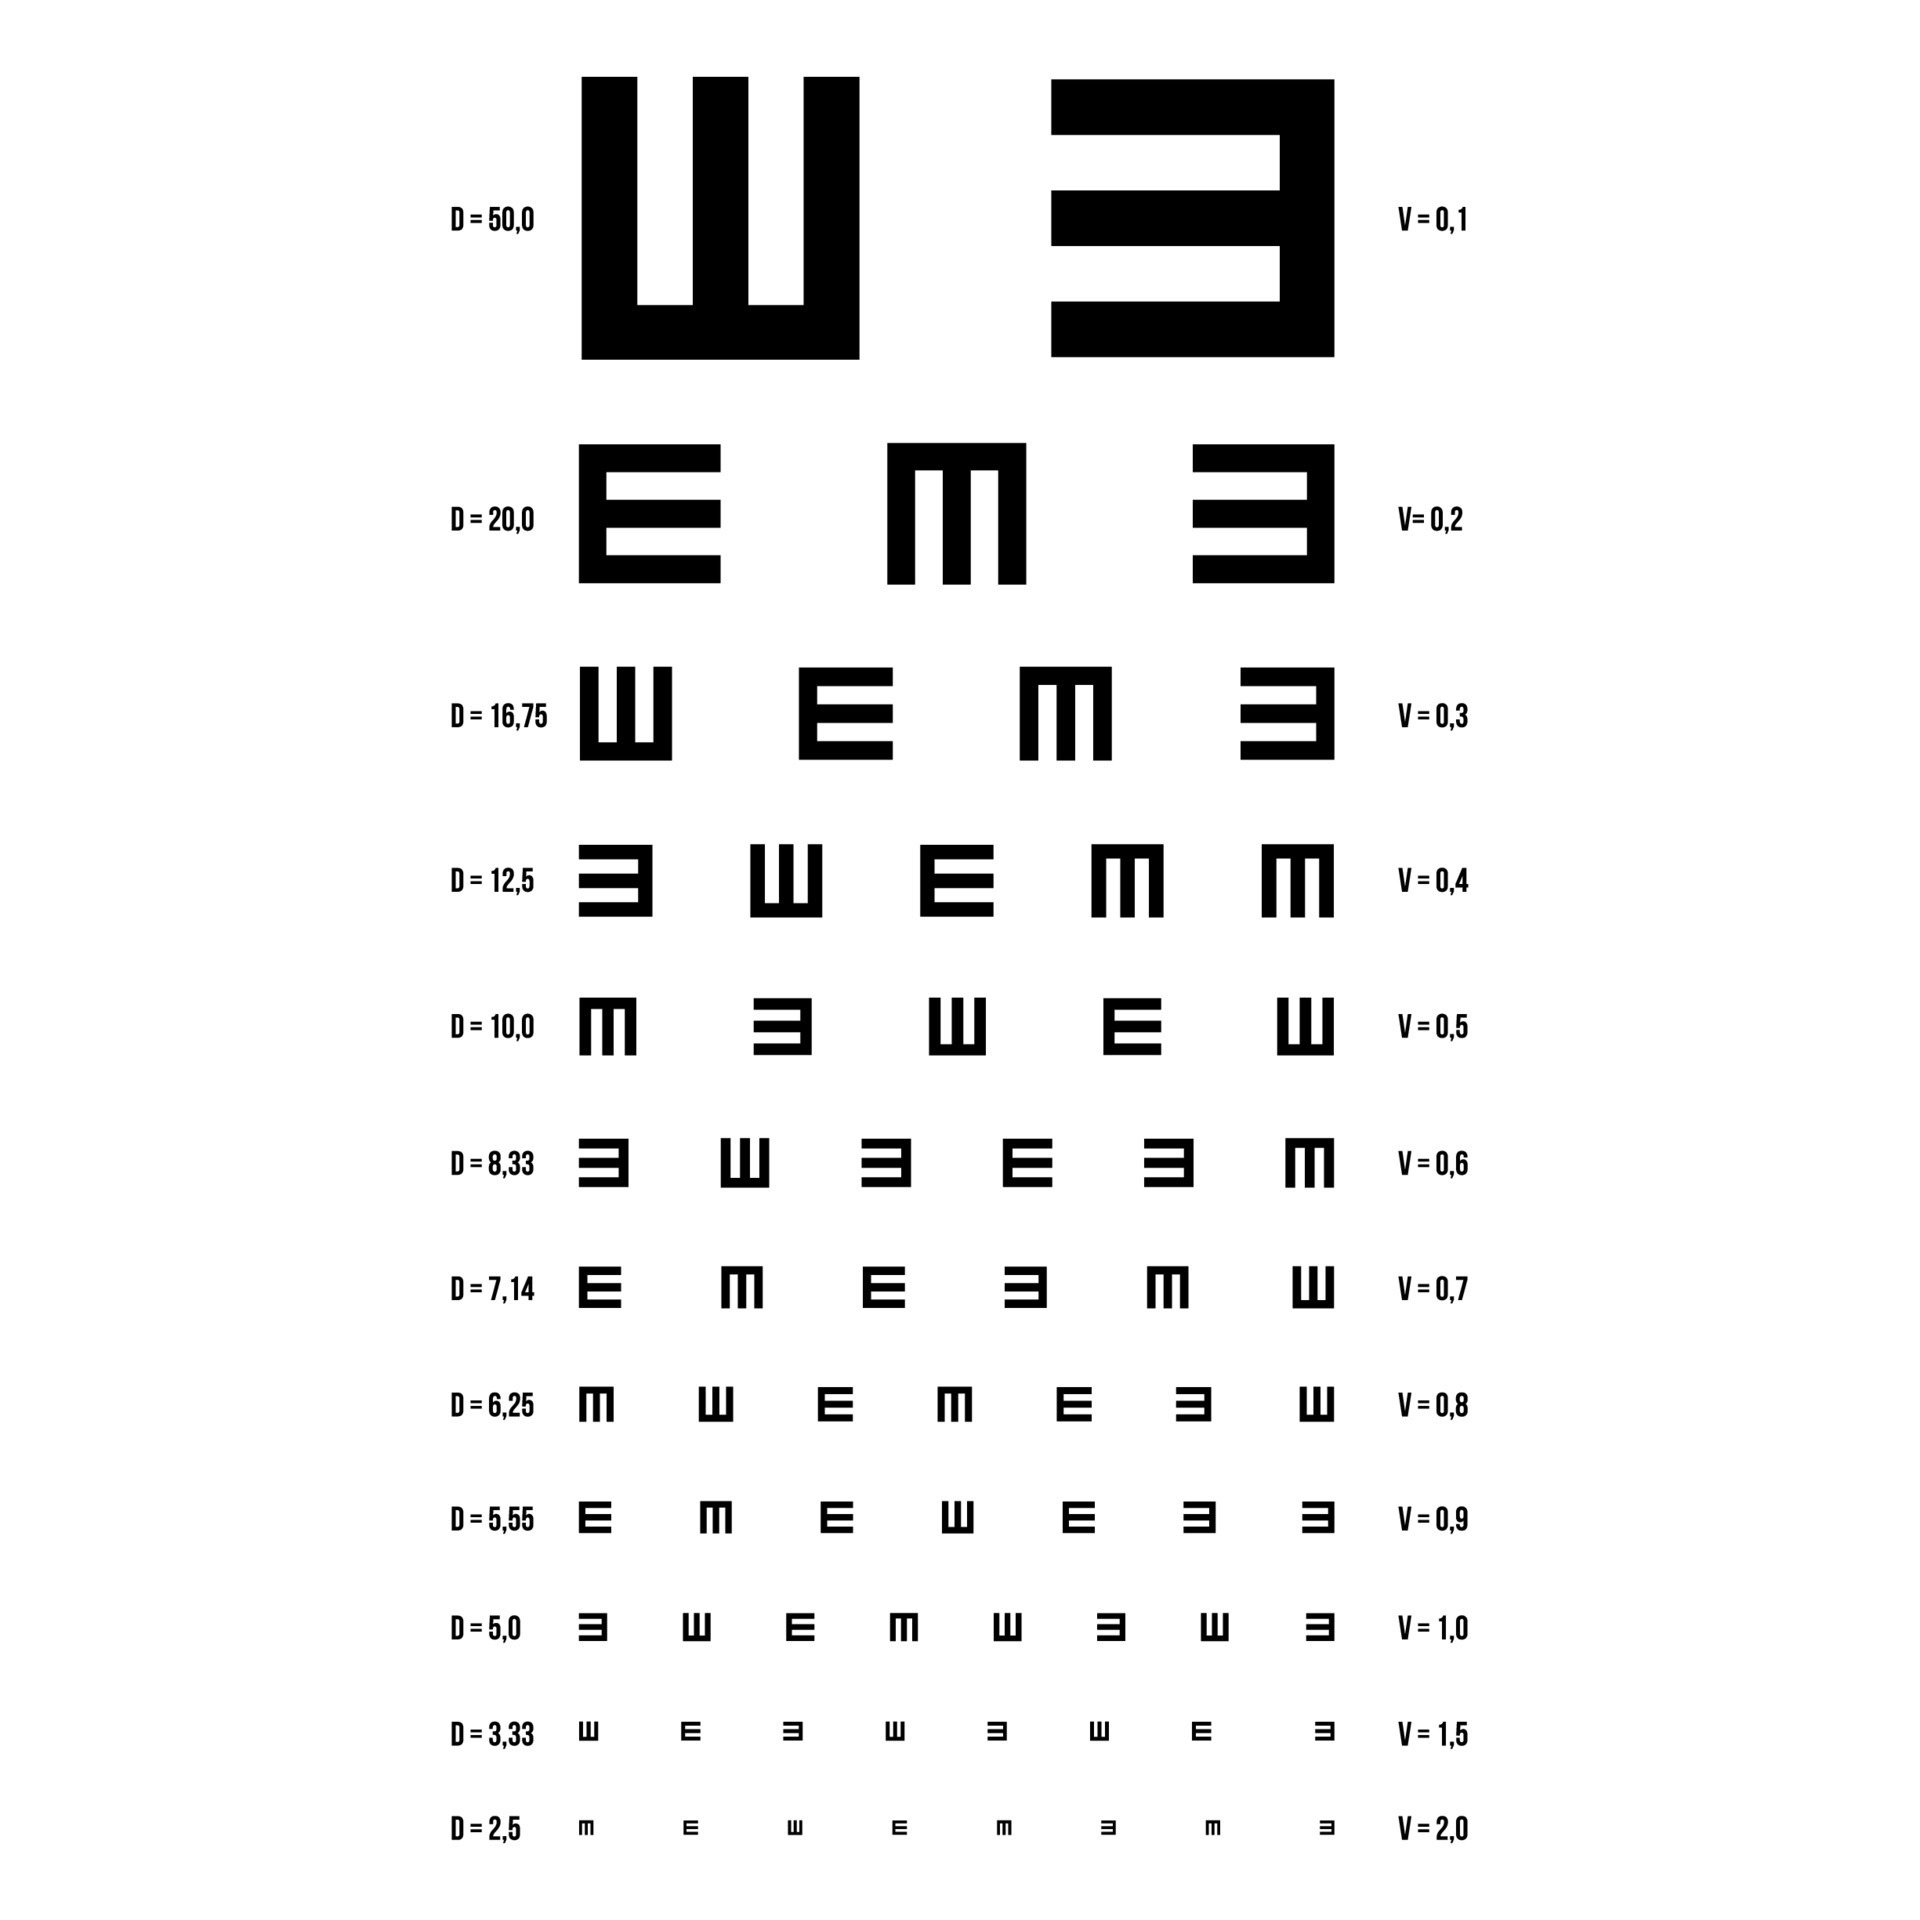 Bam visions. Таблица для проверки зрения с буквами ш. Зрение 0.1 таблица Сивцева. Таблица Снеллена для проверки зрения. Схема для проверки глаз.